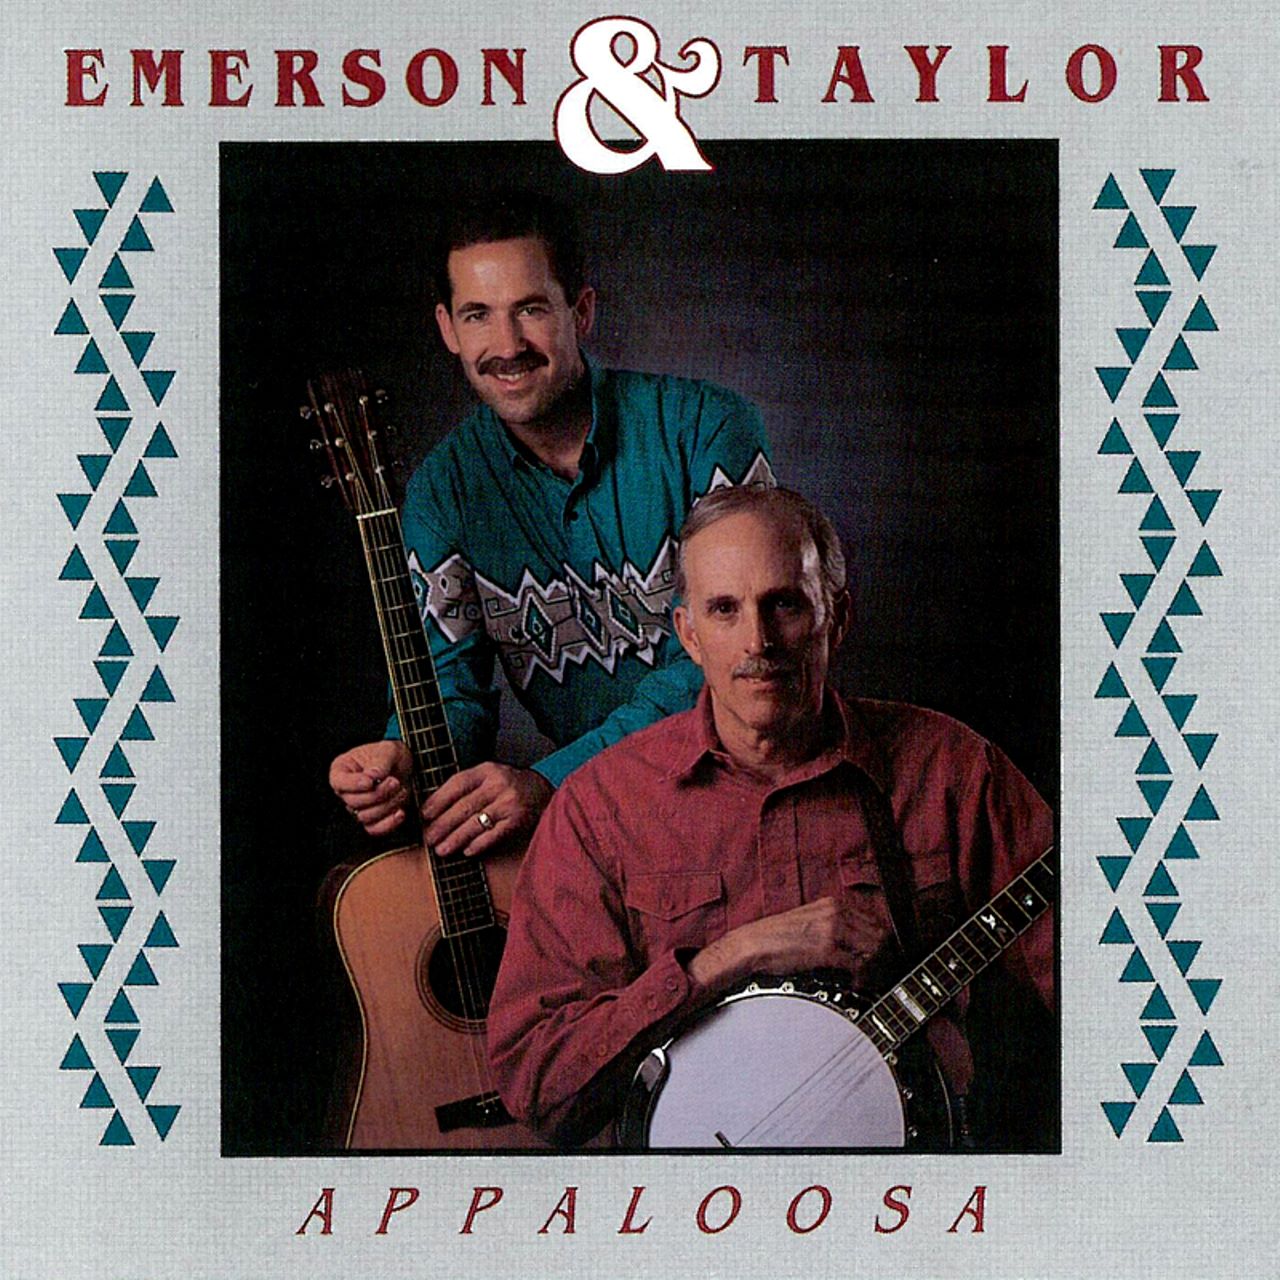 Emerson & Taylor - Appaloosa cover album